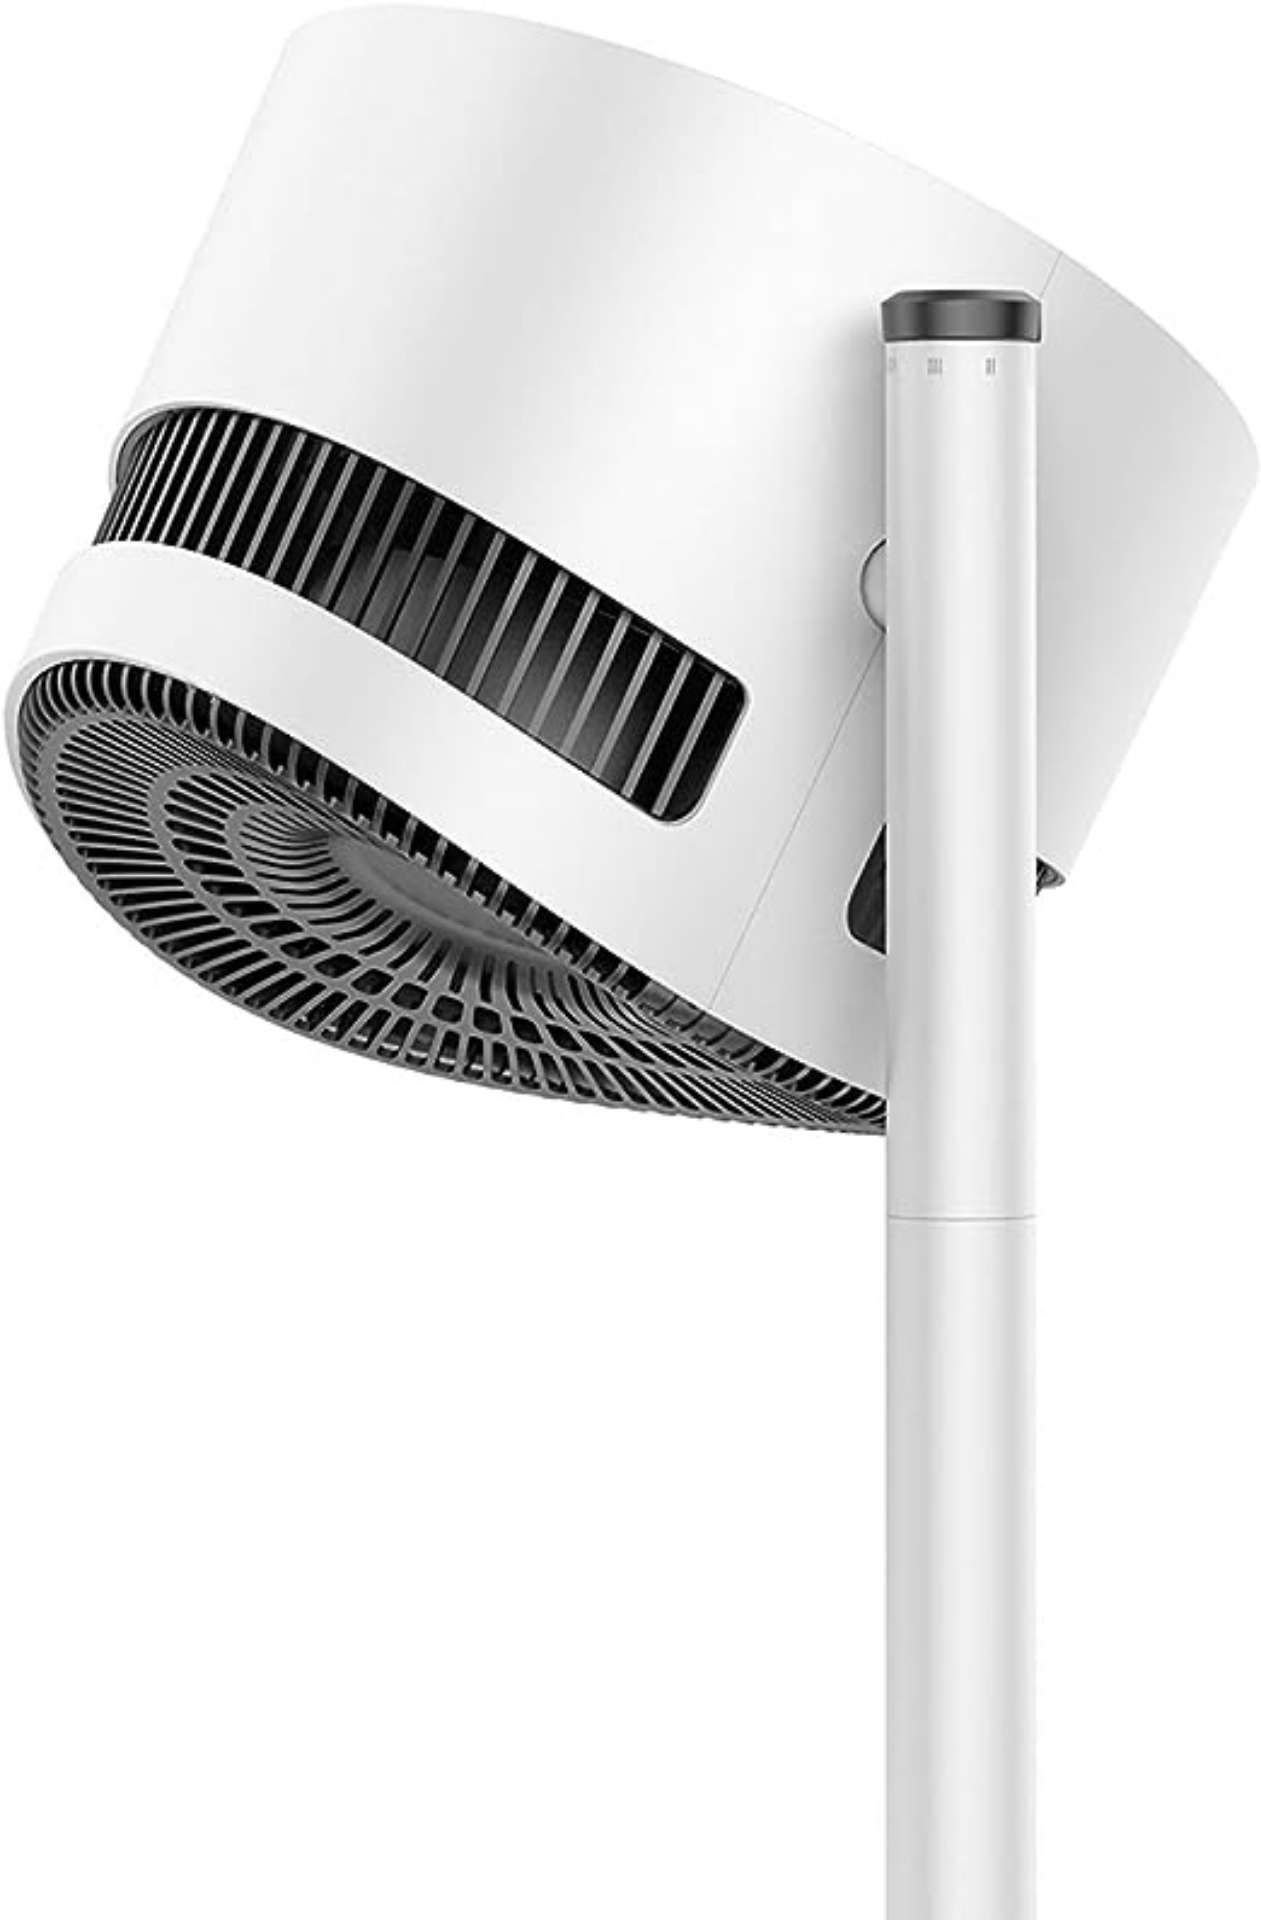 Brand New Boneco F235 Digital Air Shower Fan RRP £199, The Boneco F235 Digital Airshower Fan is one - Image 3 of 3